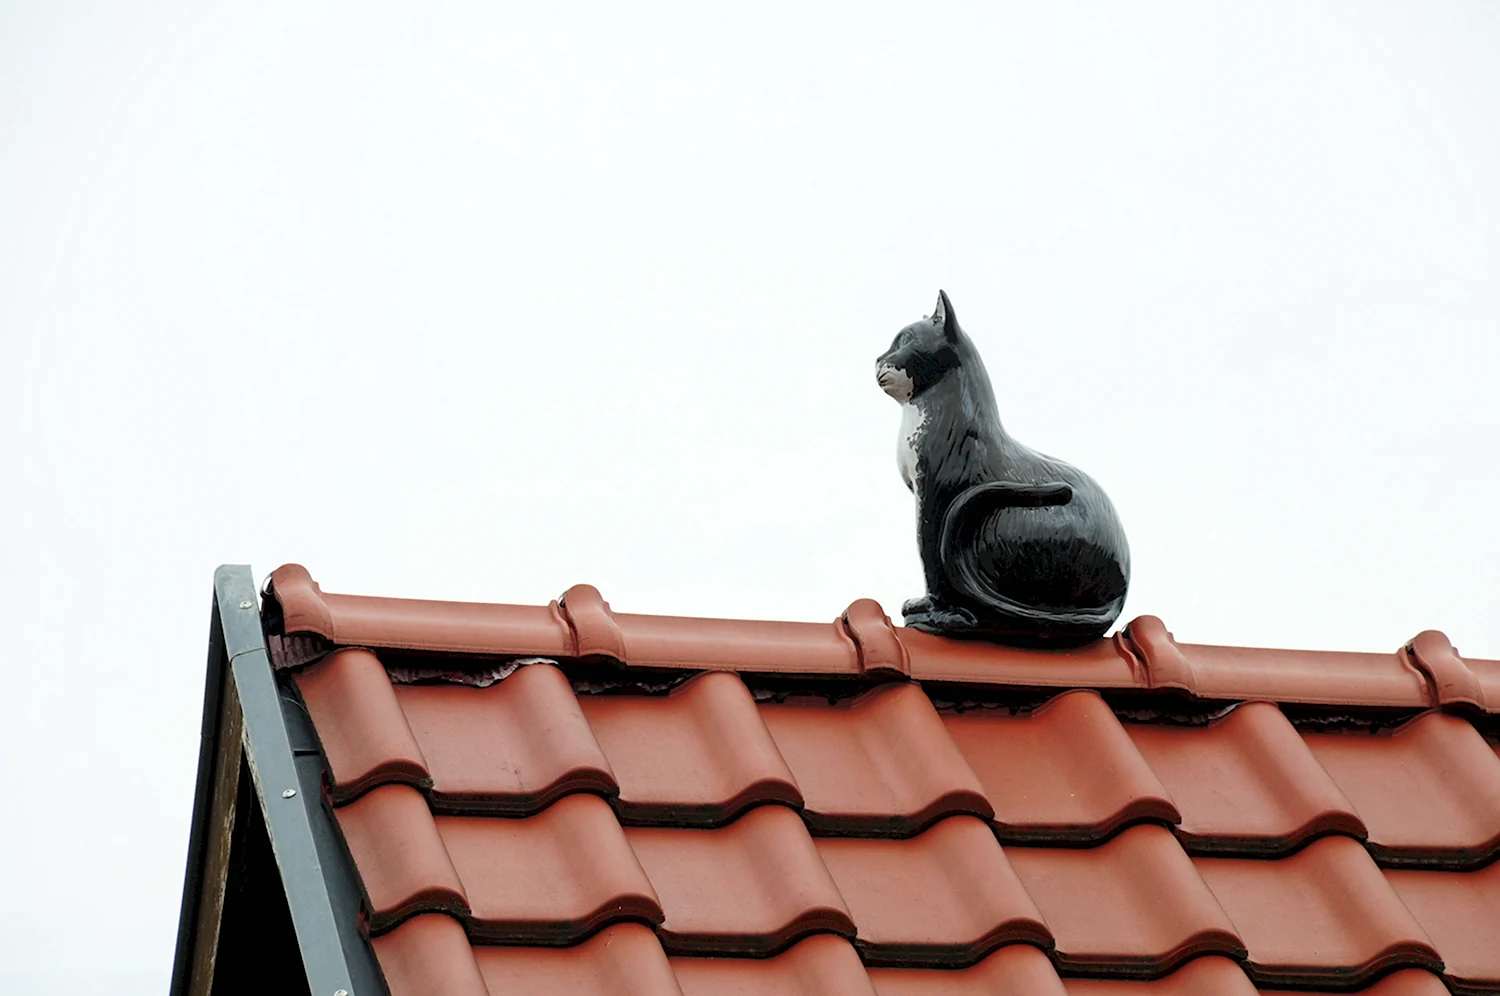 Фигурки на крыше домов